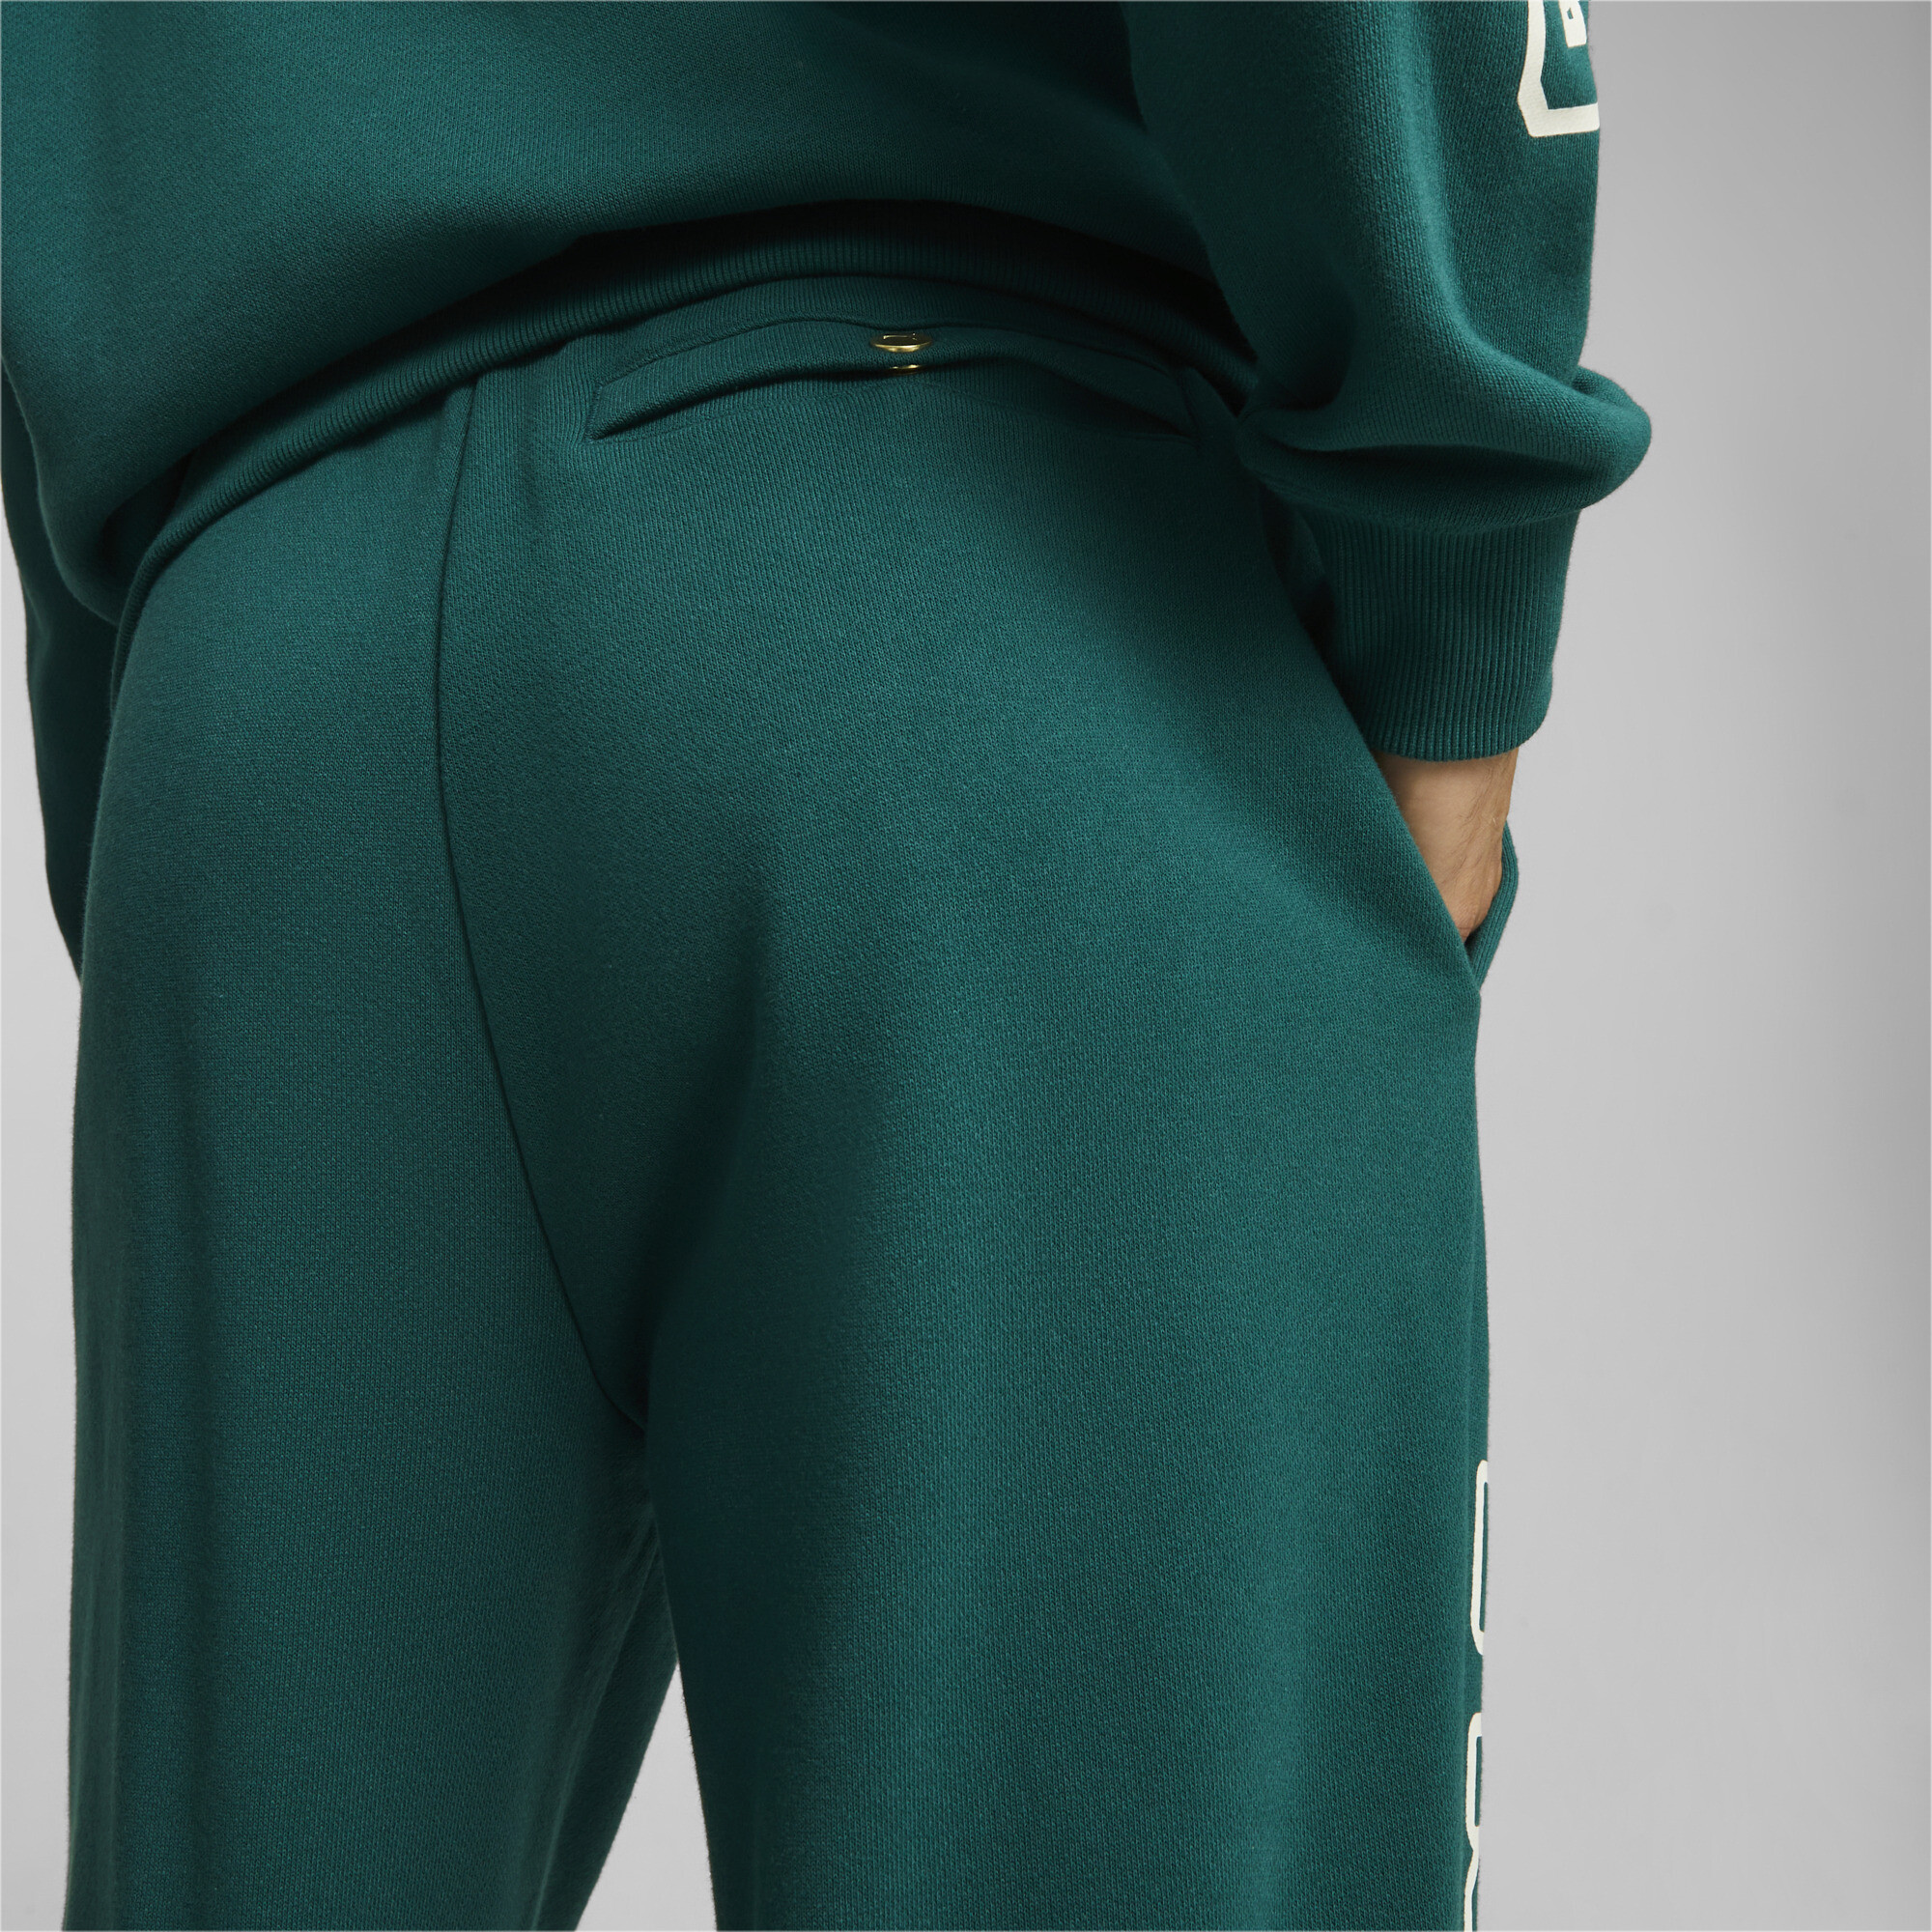 Men's Puma X STAPLE's Sweatpants, Green, Size XL, Clothing